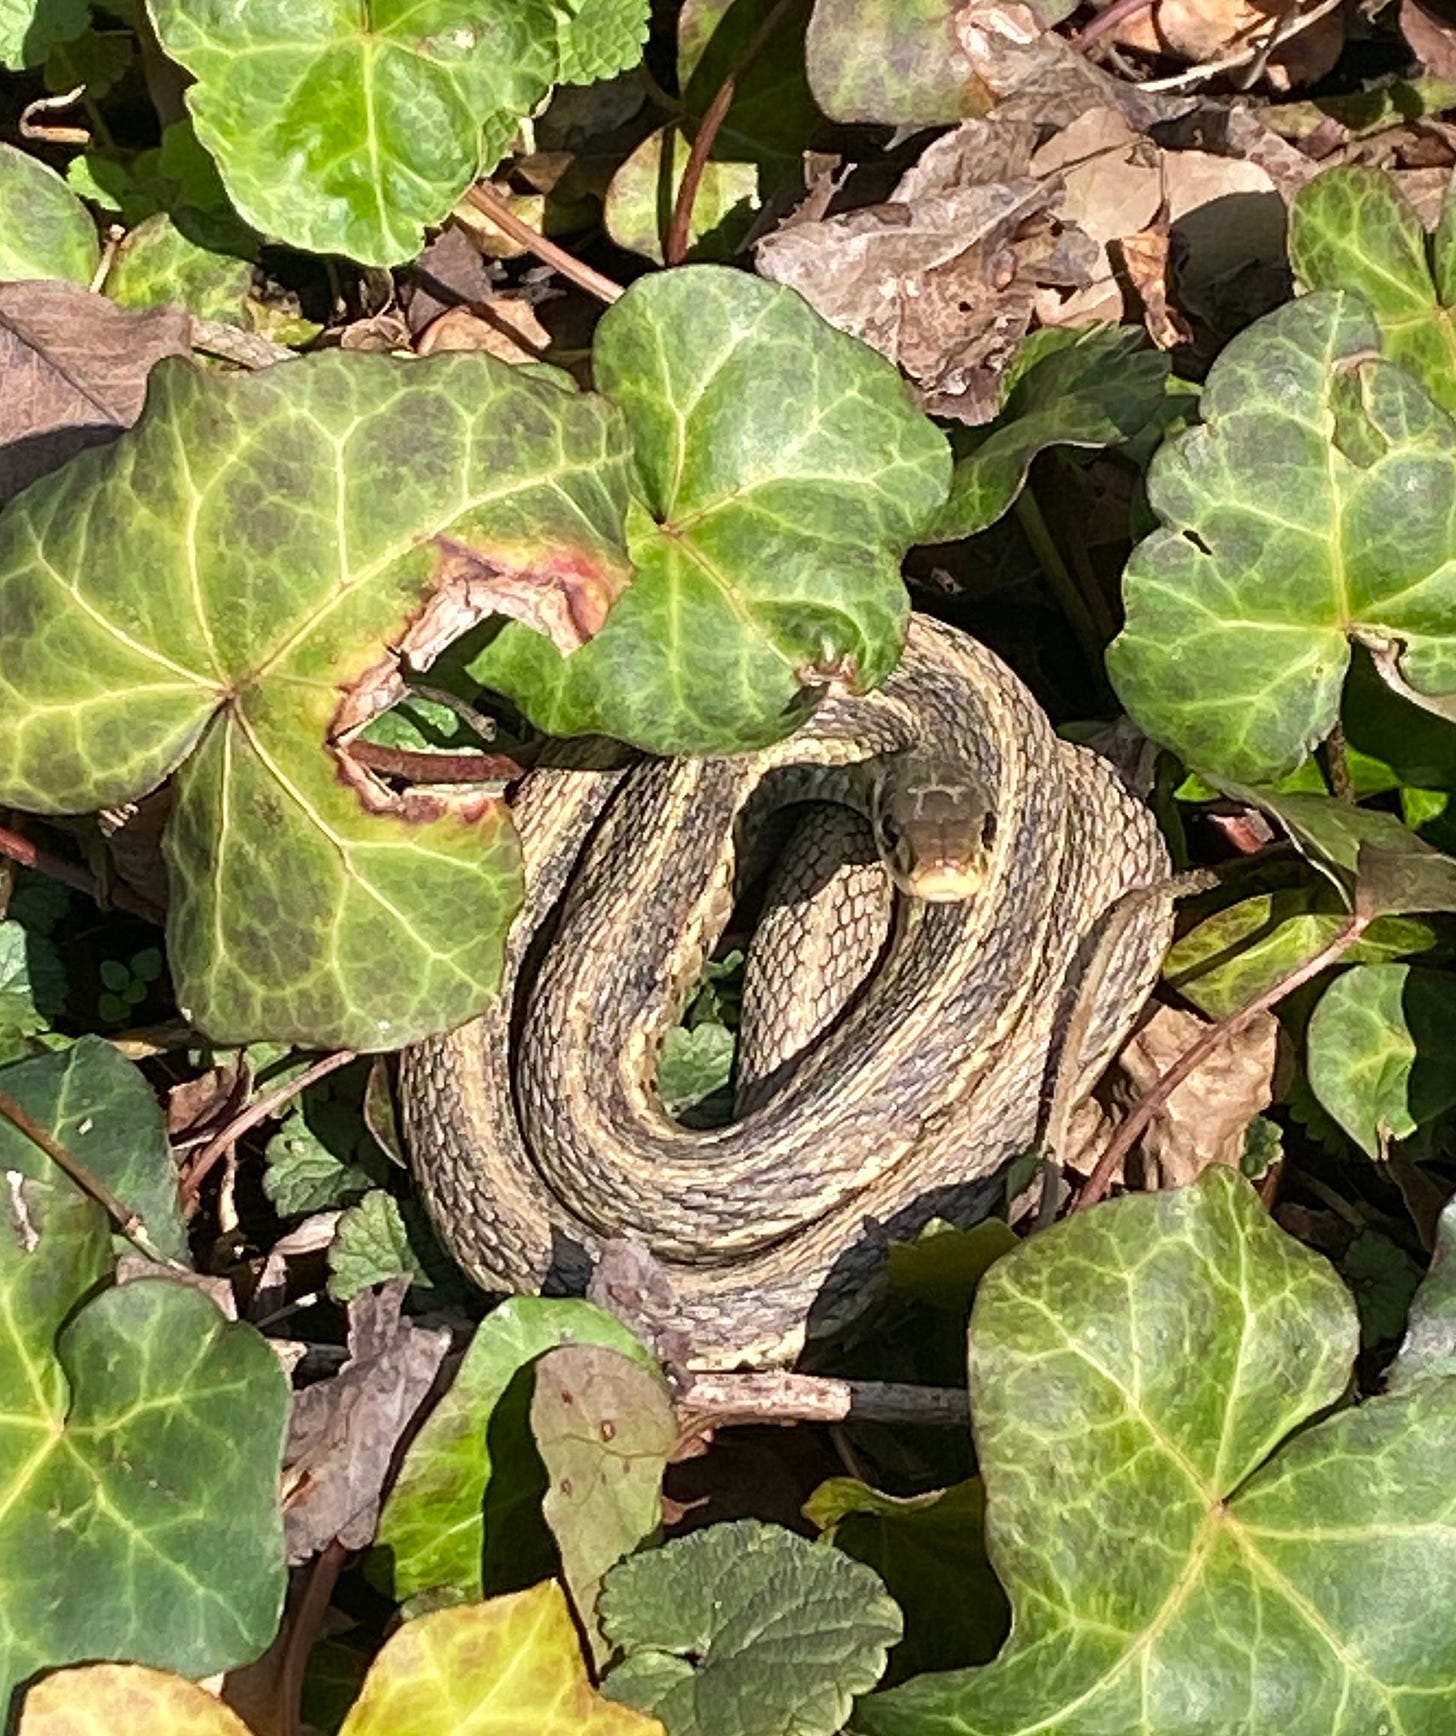 a small snake amongst leaves